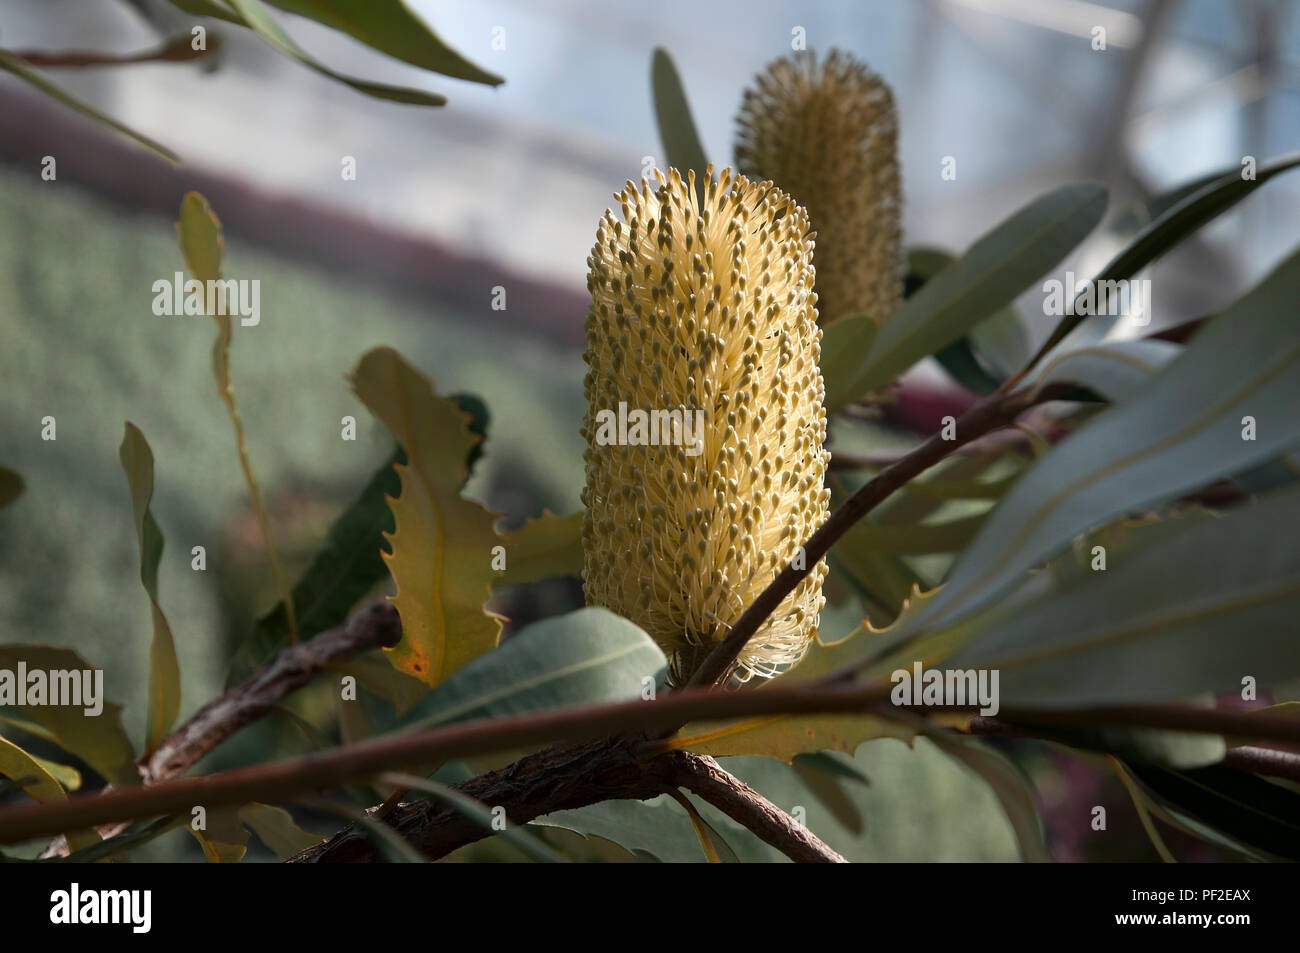 Sydney Australia, Yellow banksia flower cones on tree branch Stock Photo